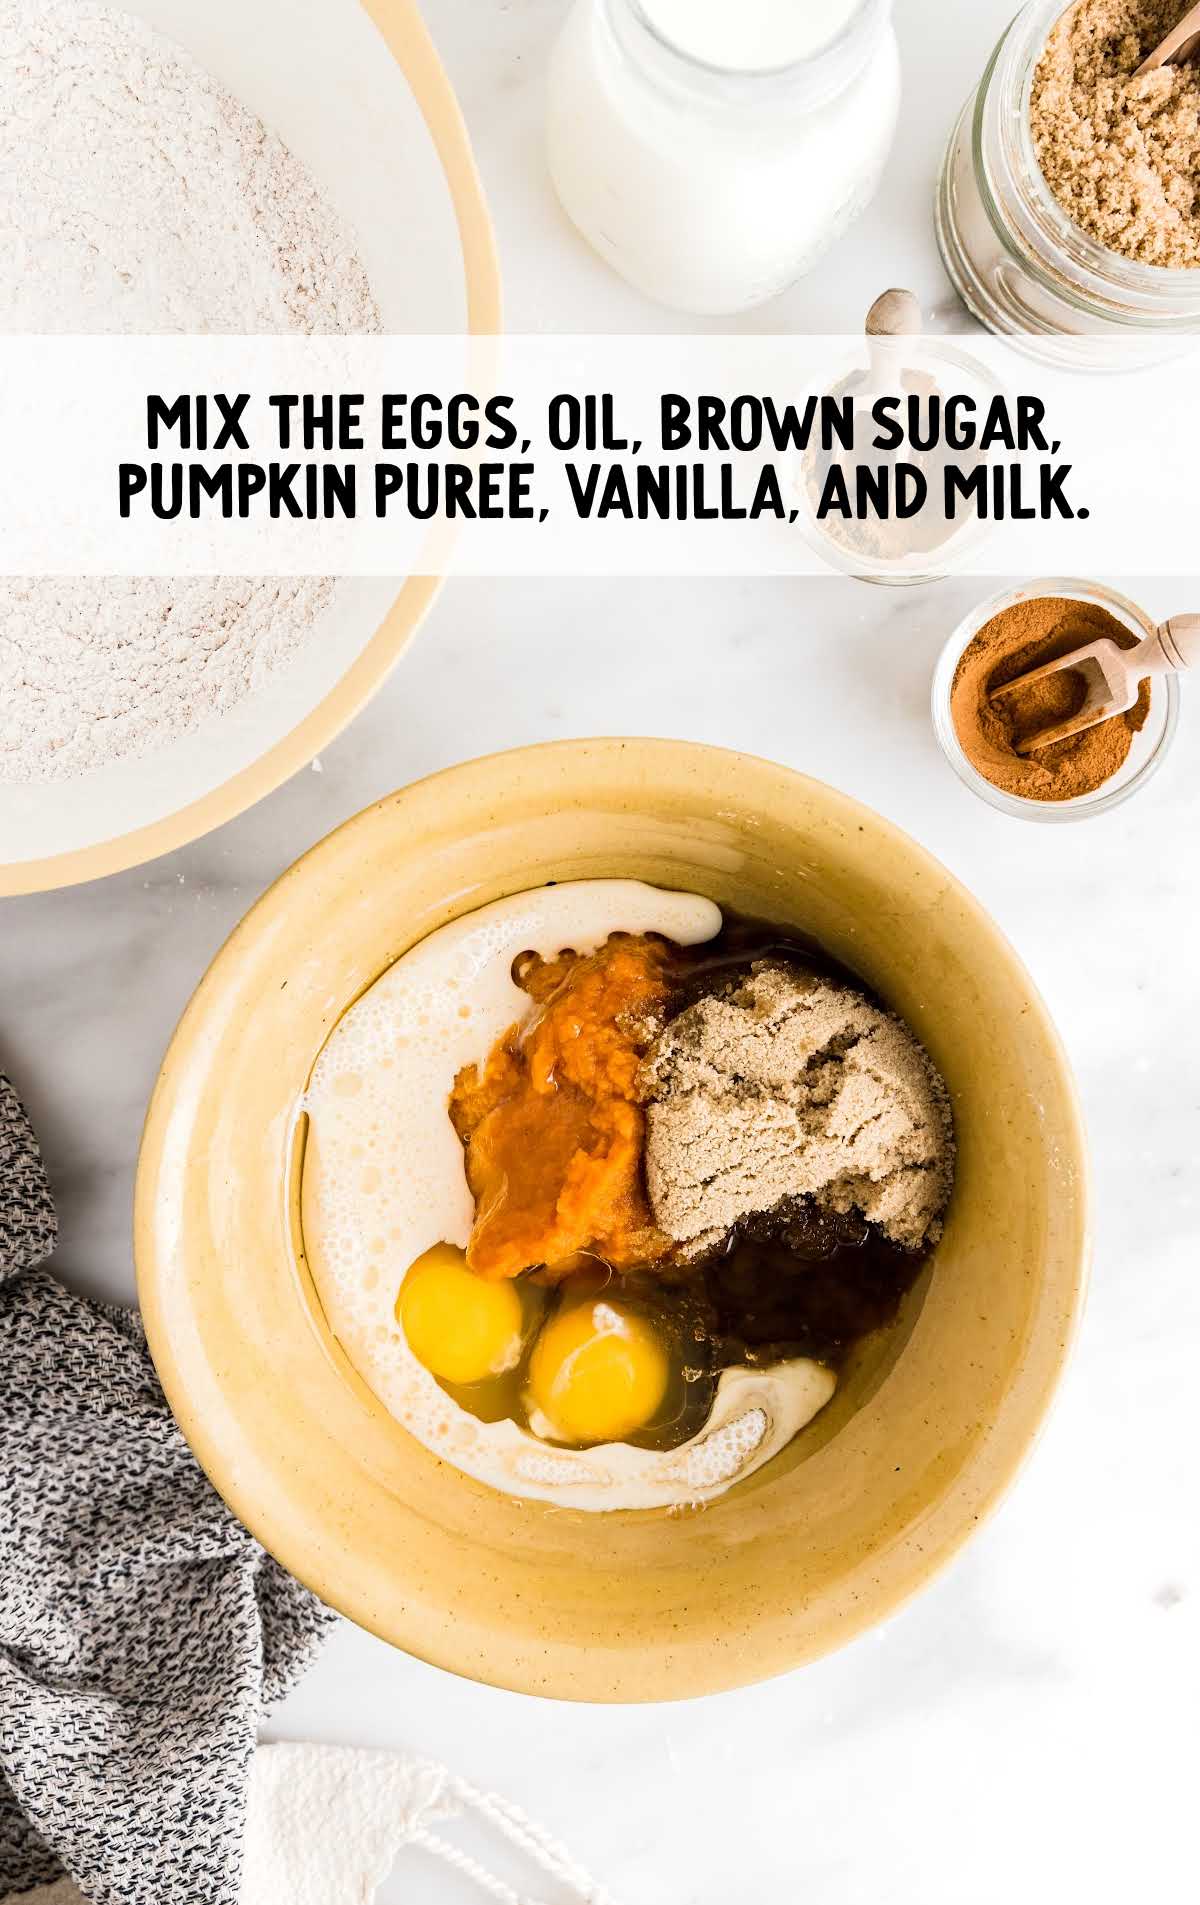 eggs, oil, brown sugar, pumpkin puree, vanilla, and milk mixed in a bowl